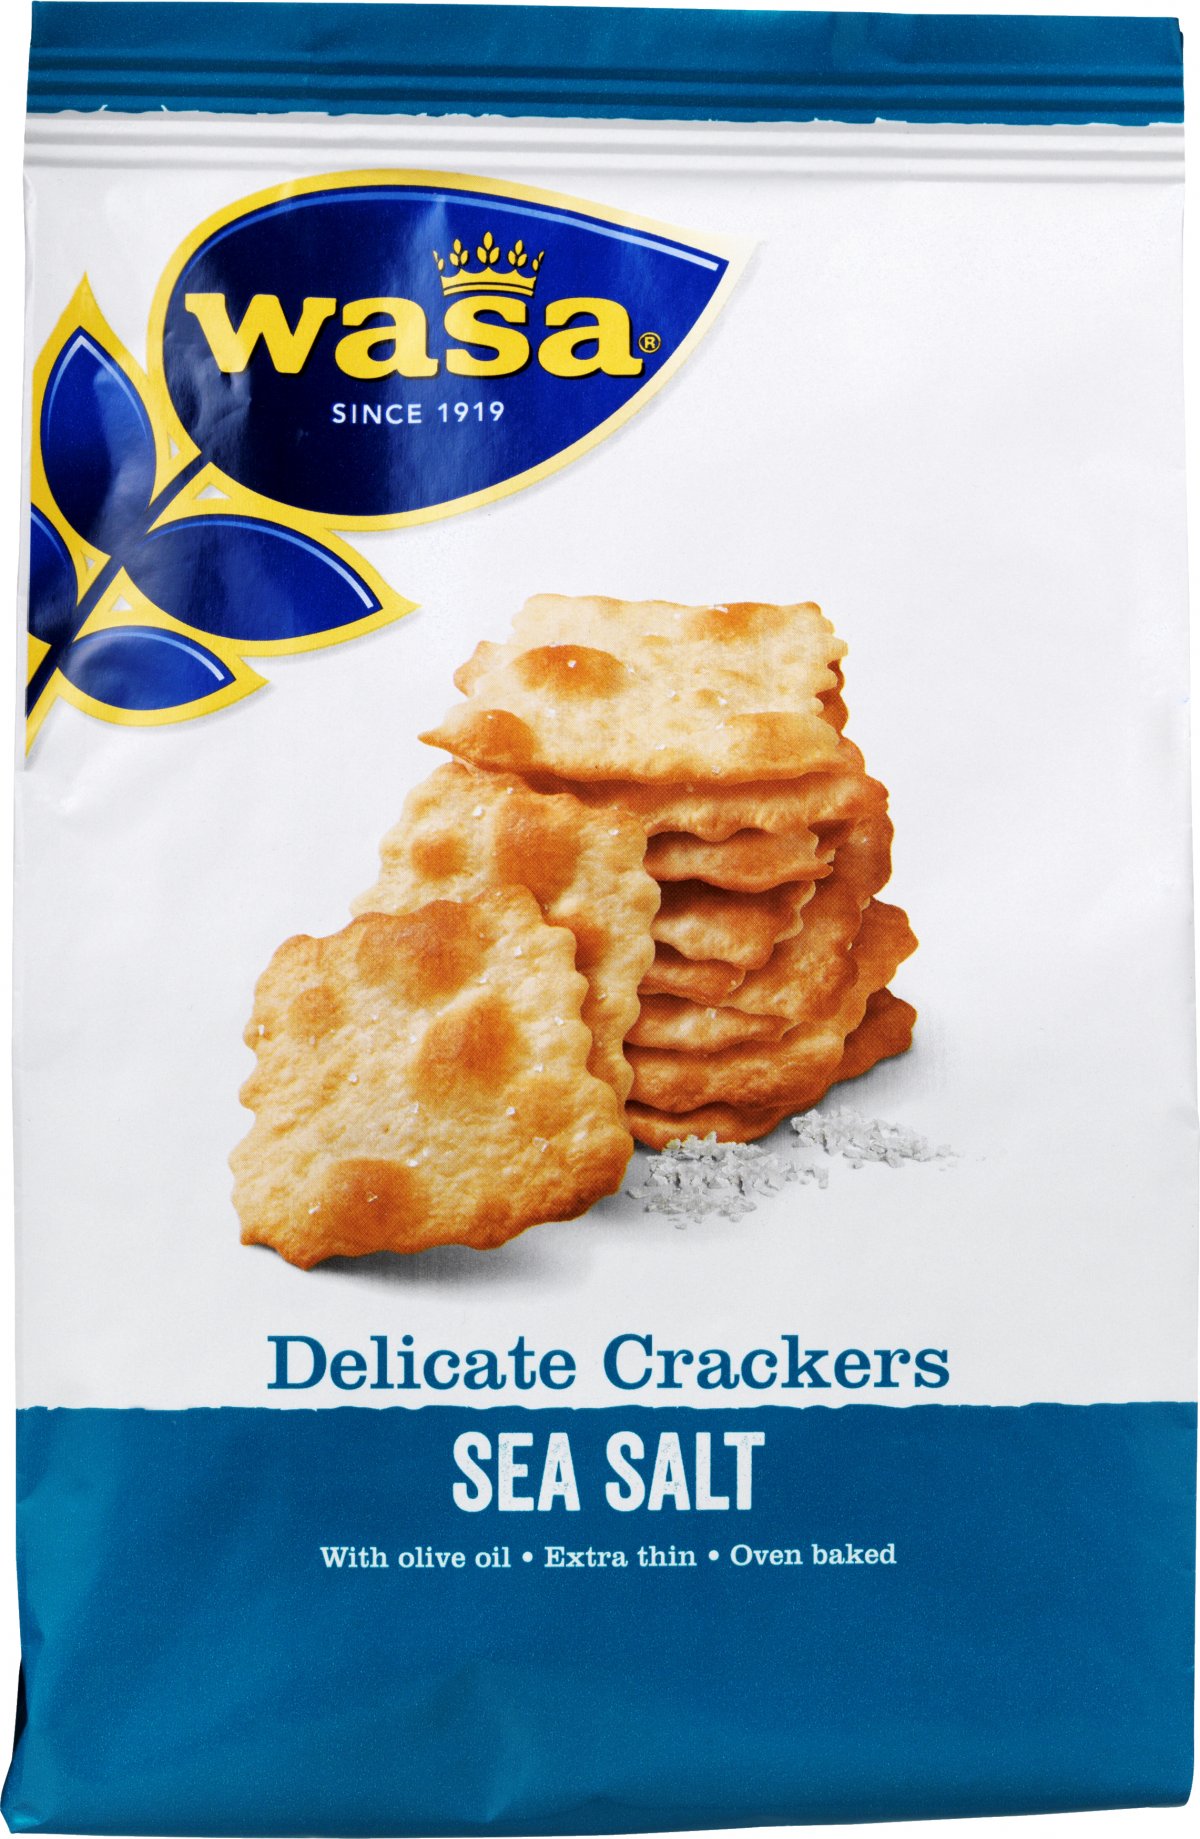 wasa-delicate-crackers-sea-salt-180-g-kiks-kager-vin-med-mere-dk